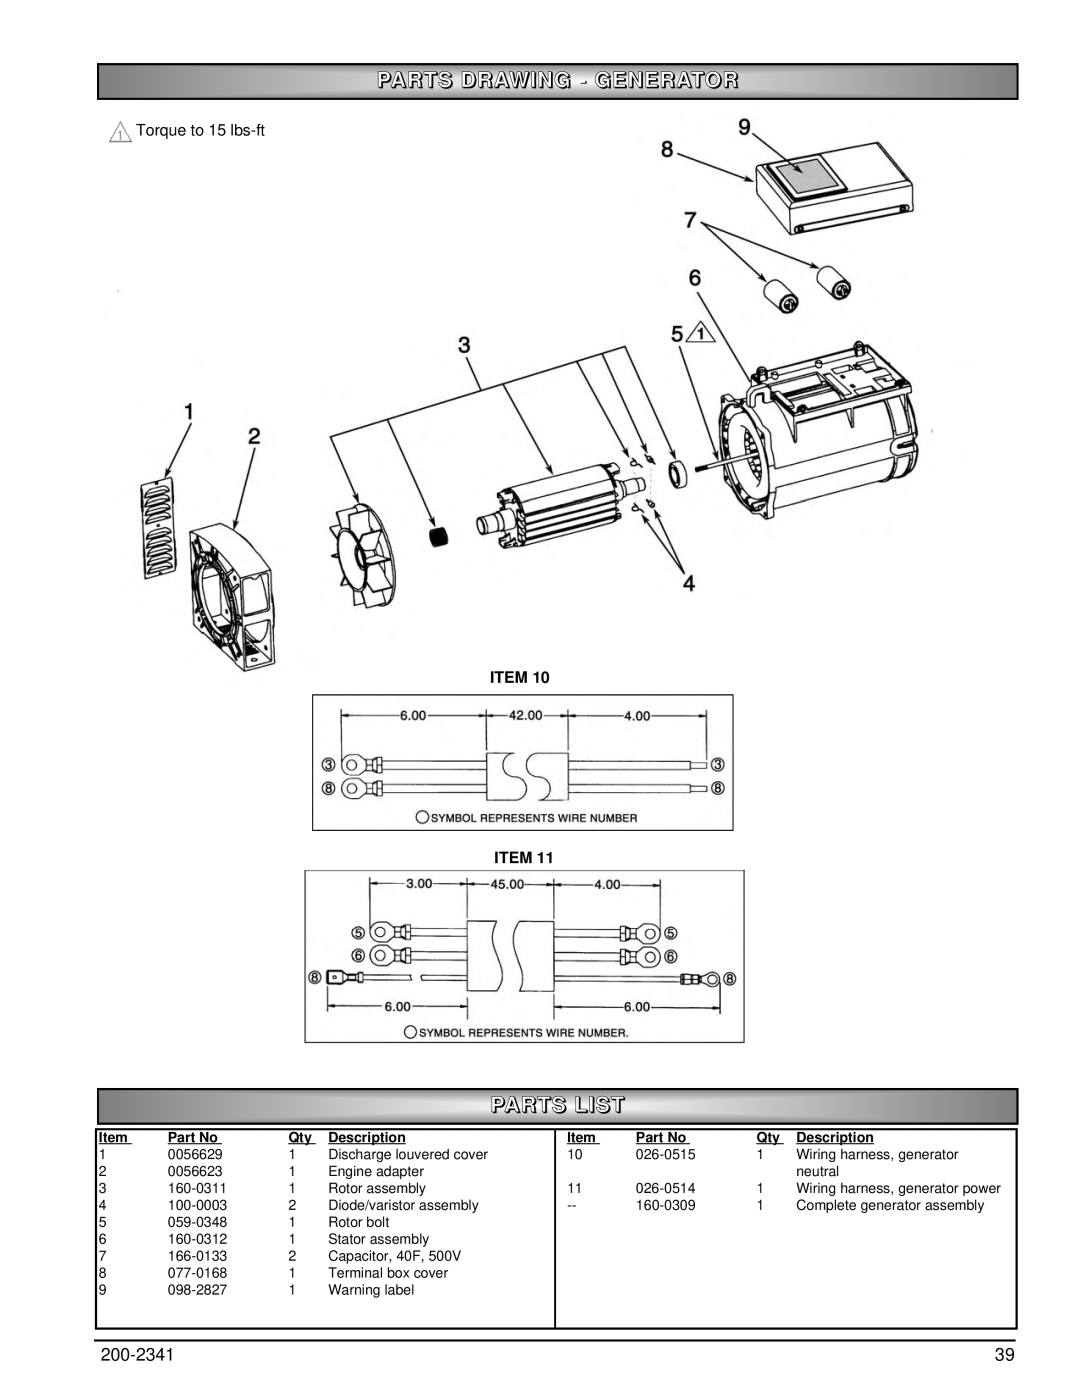 Powermate PM400911 owner manual Parts Drawing - Generator, Parts List, Item Item, Description 